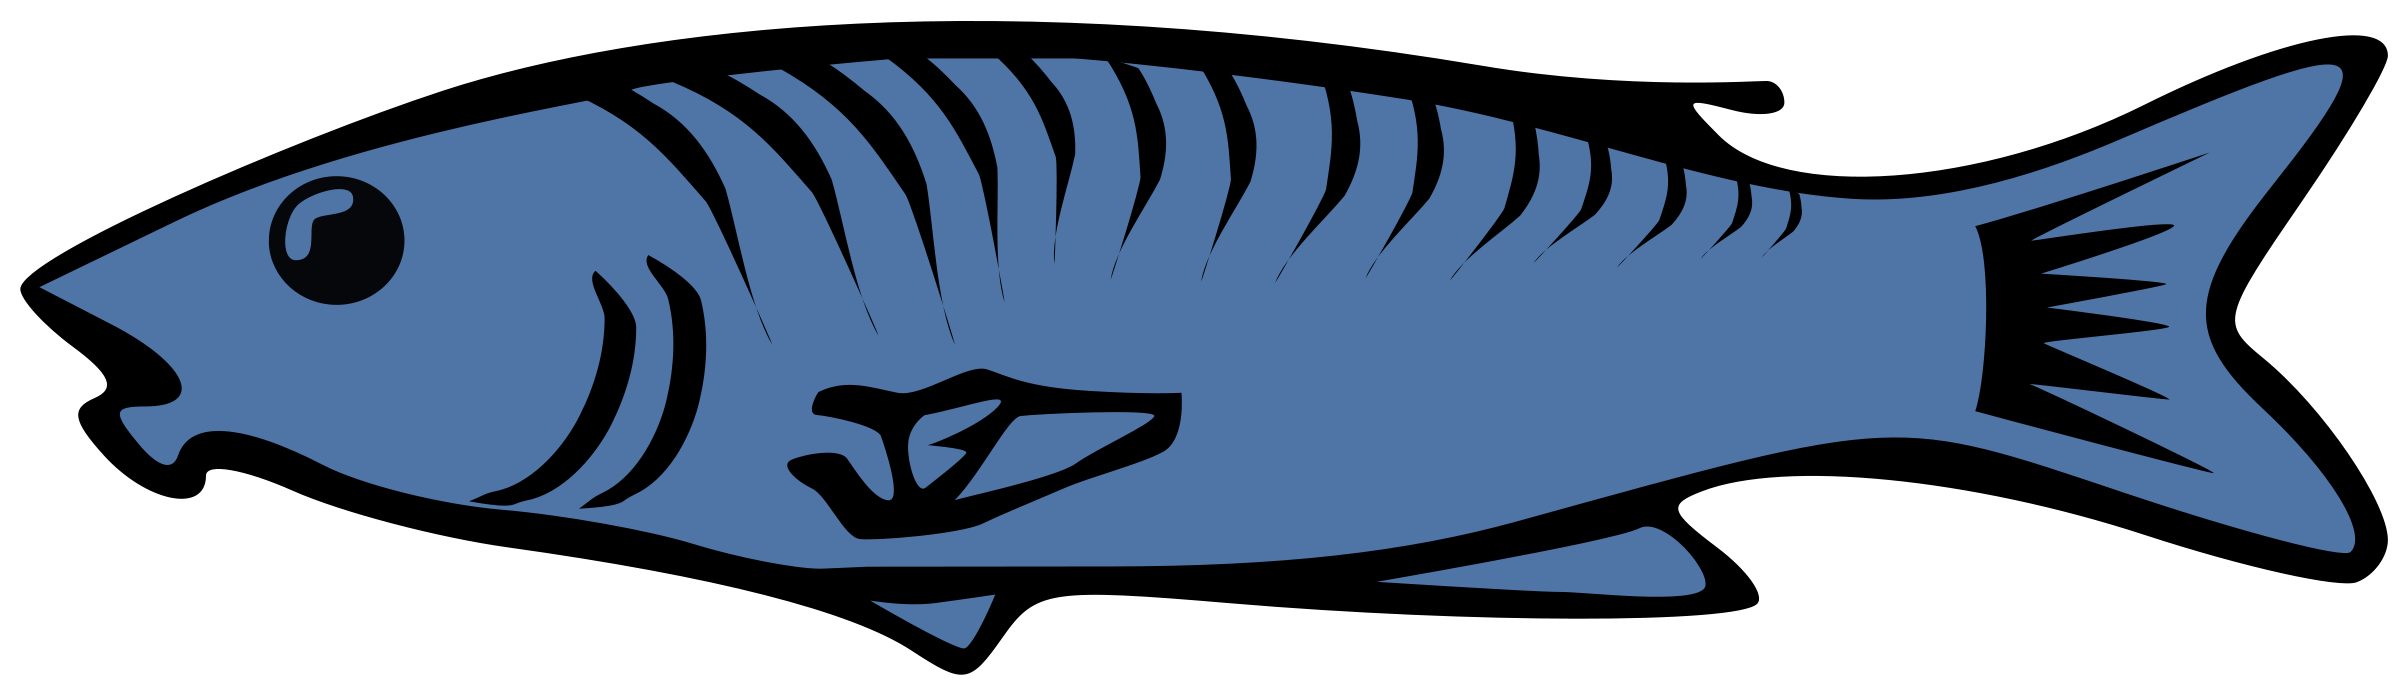 Salmon clipart aboriginal symbol.  collection of fish